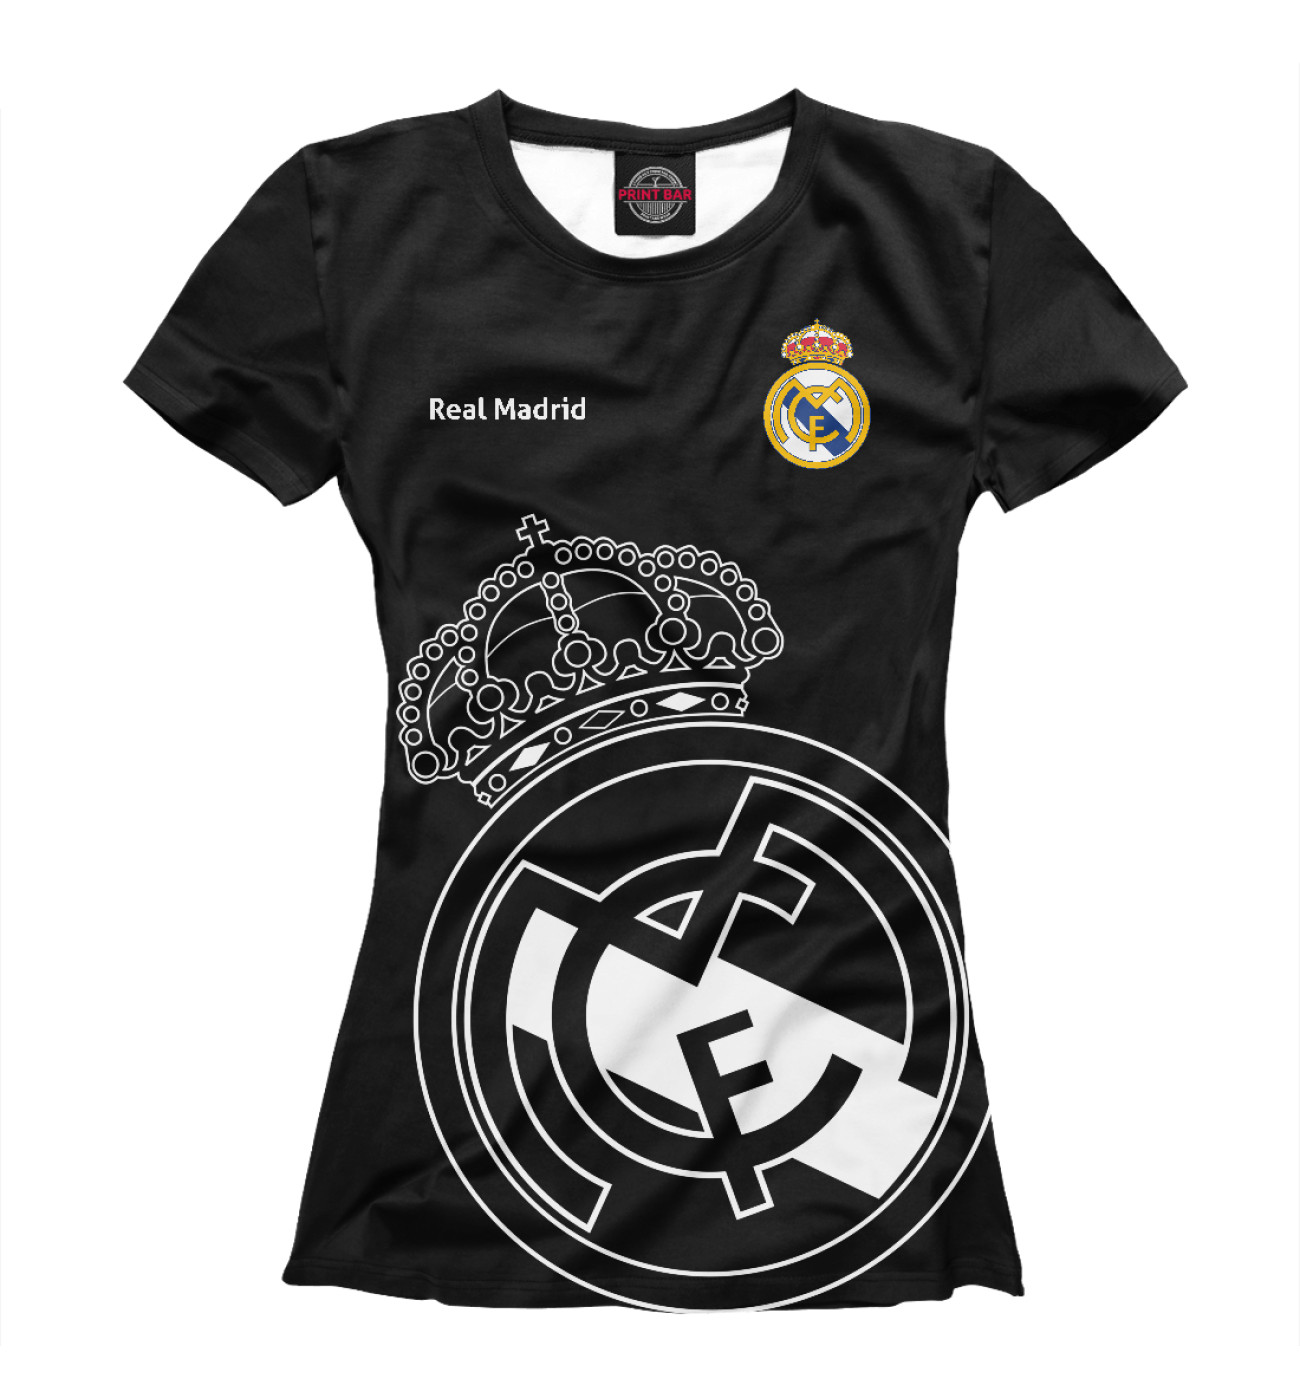 Real madrid купить футболку. Футболка Реал Мадрид. Футболки футболка Реал Мадрид. Майка Реал Мадрид. Девушка в футболке Реал Мадрид.